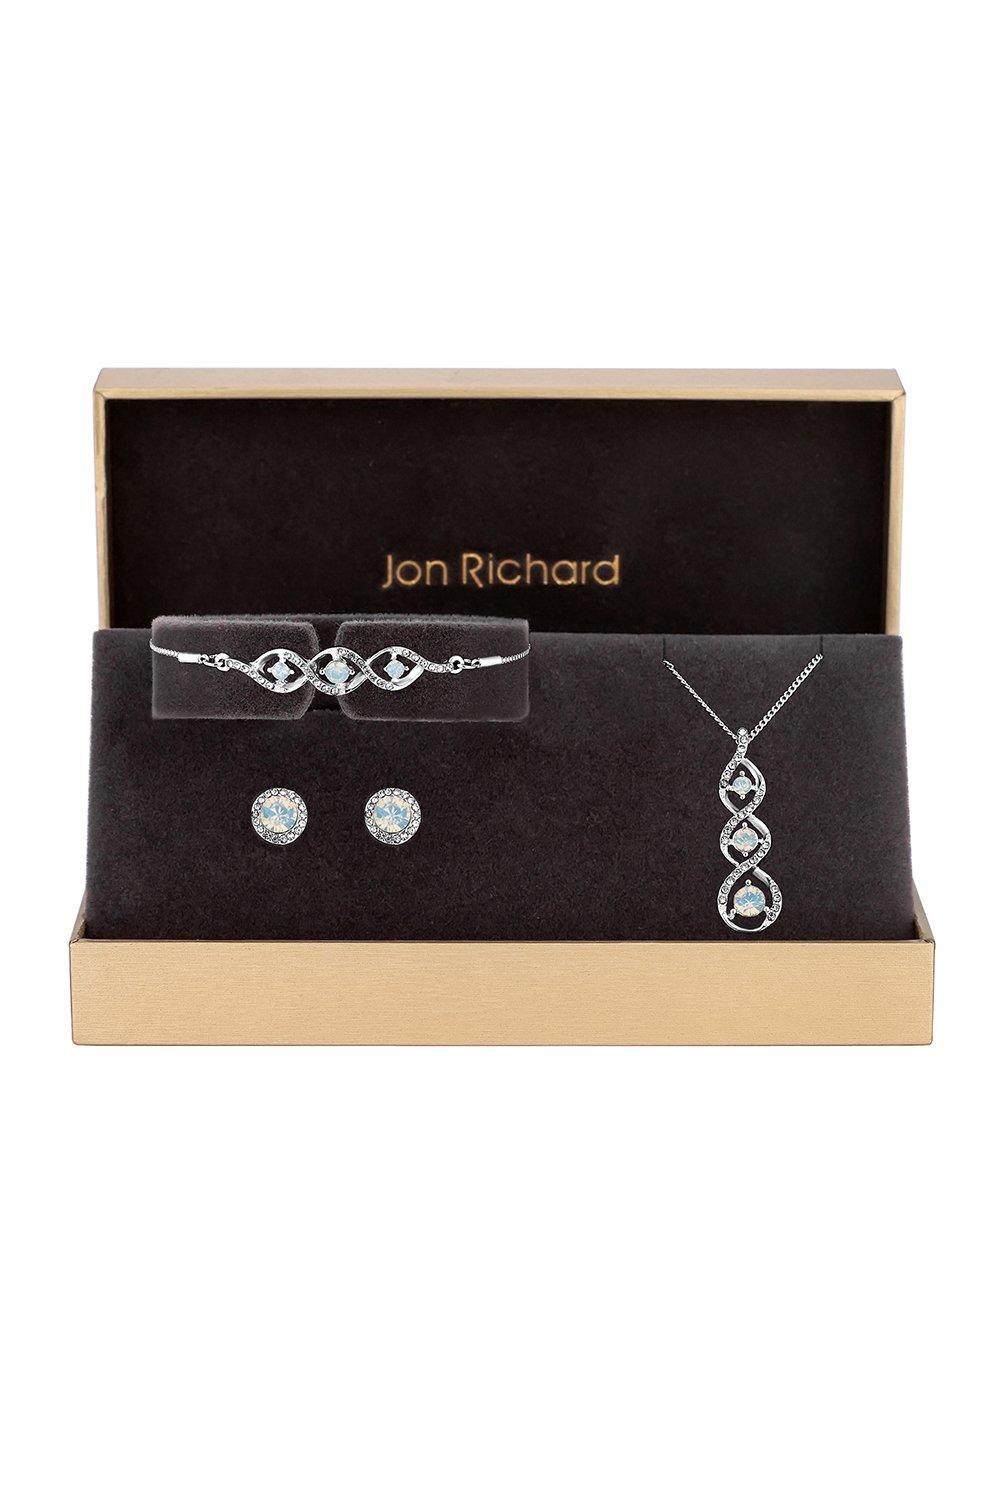 Jon Richard Women's Silver And Opal Trio Set - Gift Boxed|silver